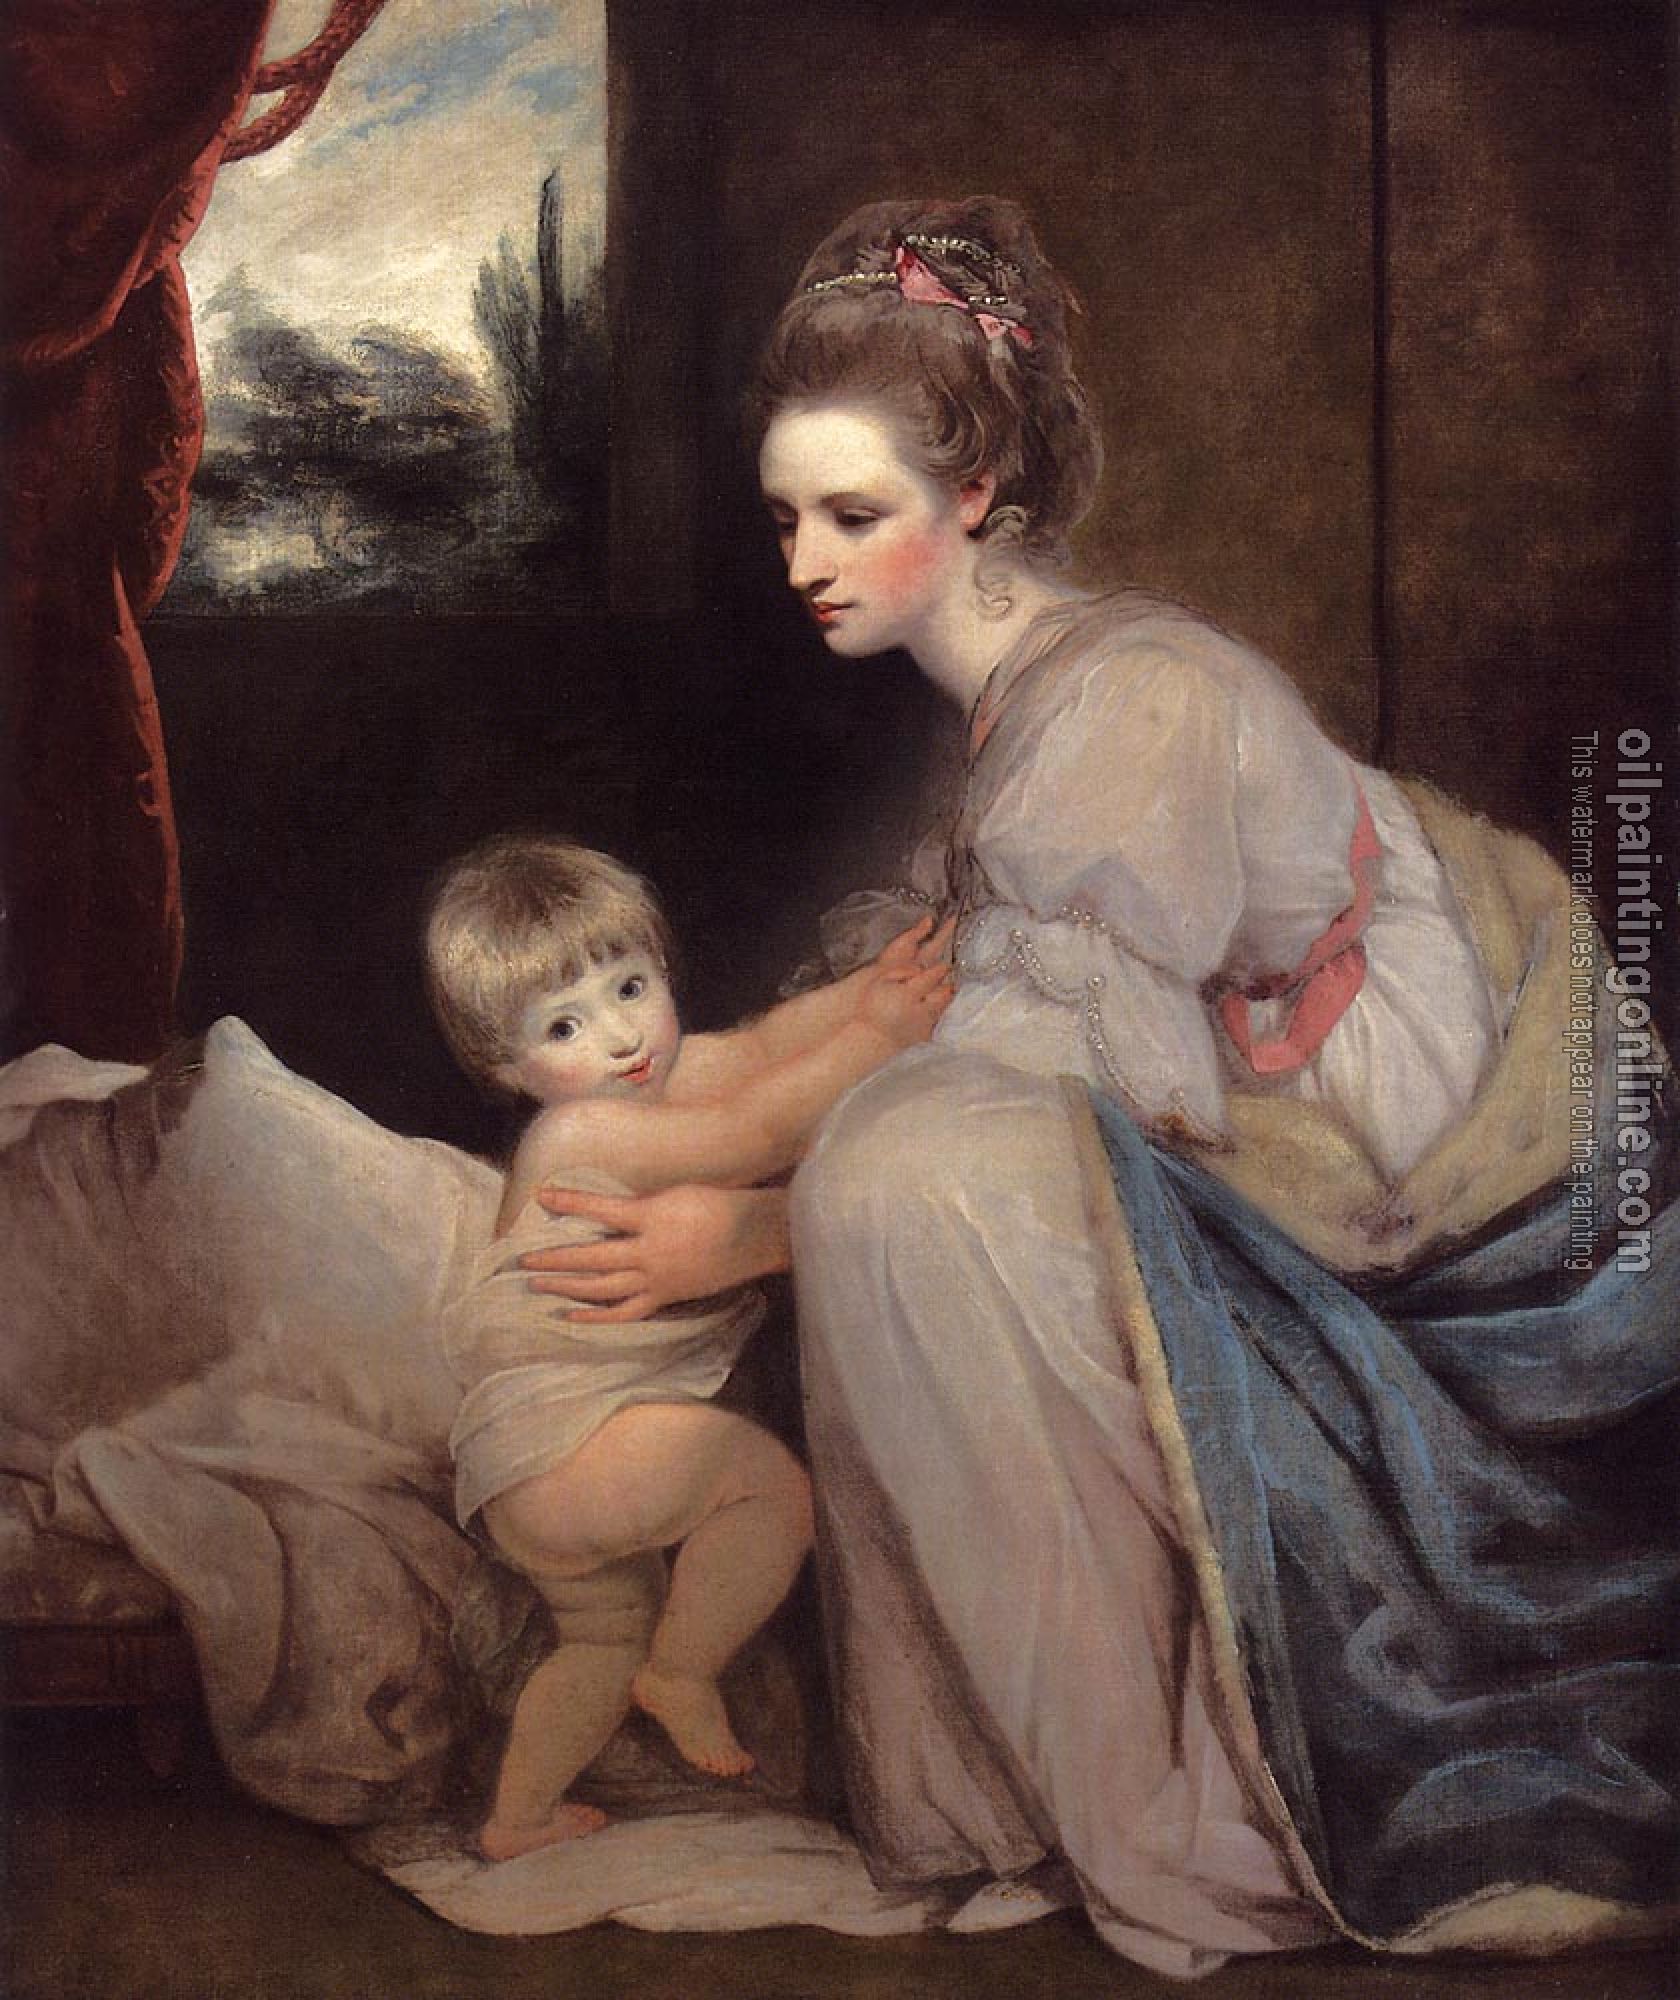 Reynolds, Joshua - Reynolds, Joshua oil painting